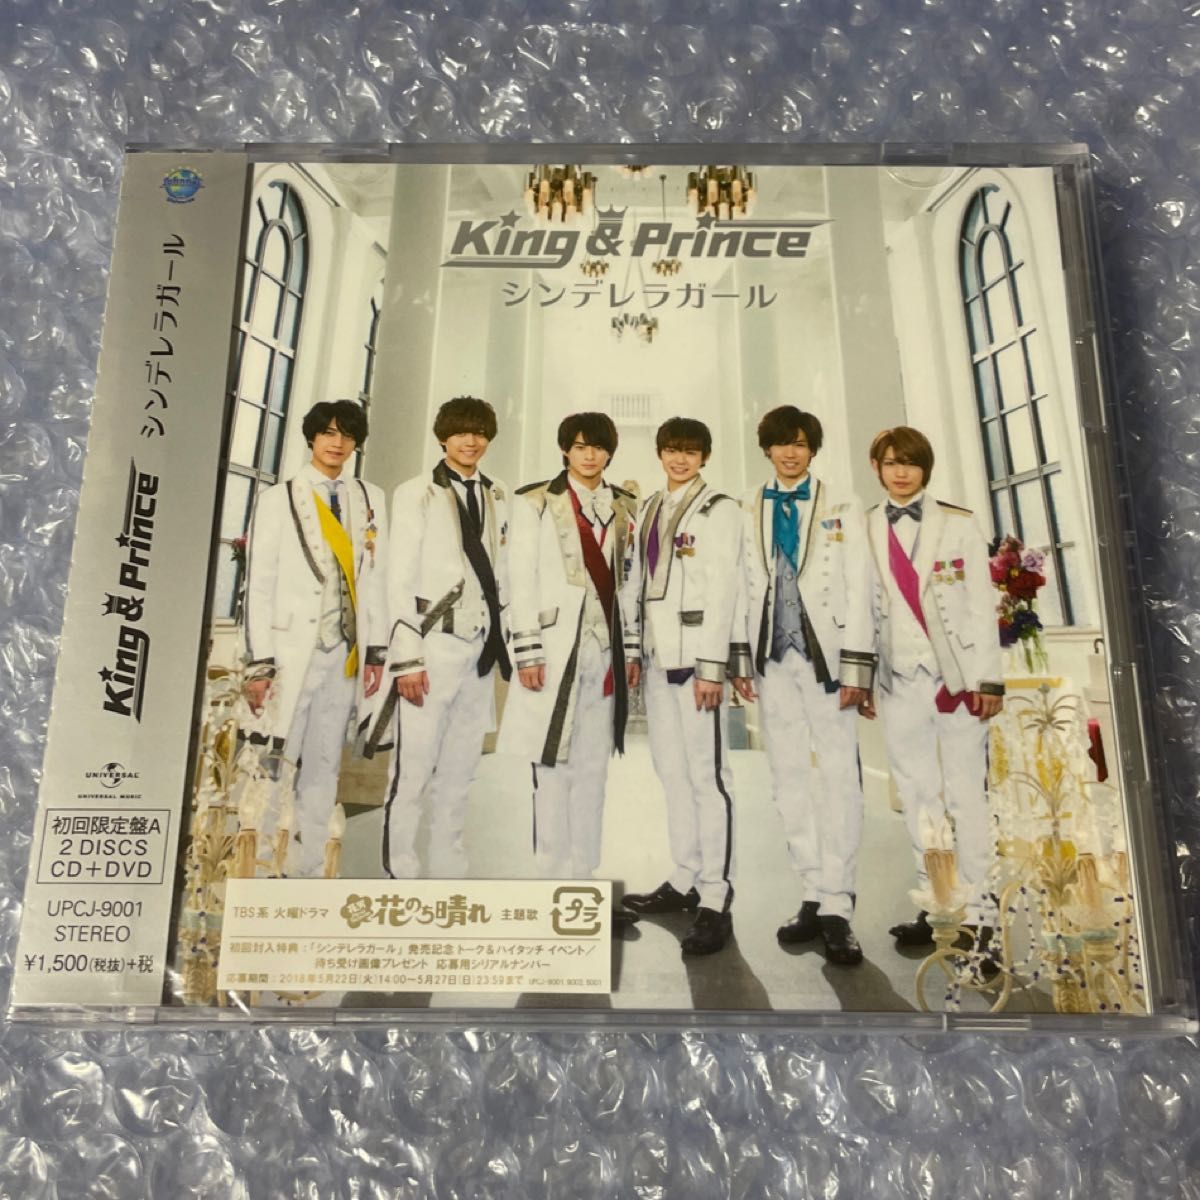 King&Prince シンデレラガール 初回限定盤A CD+DVD 邦楽 邦楽 ...